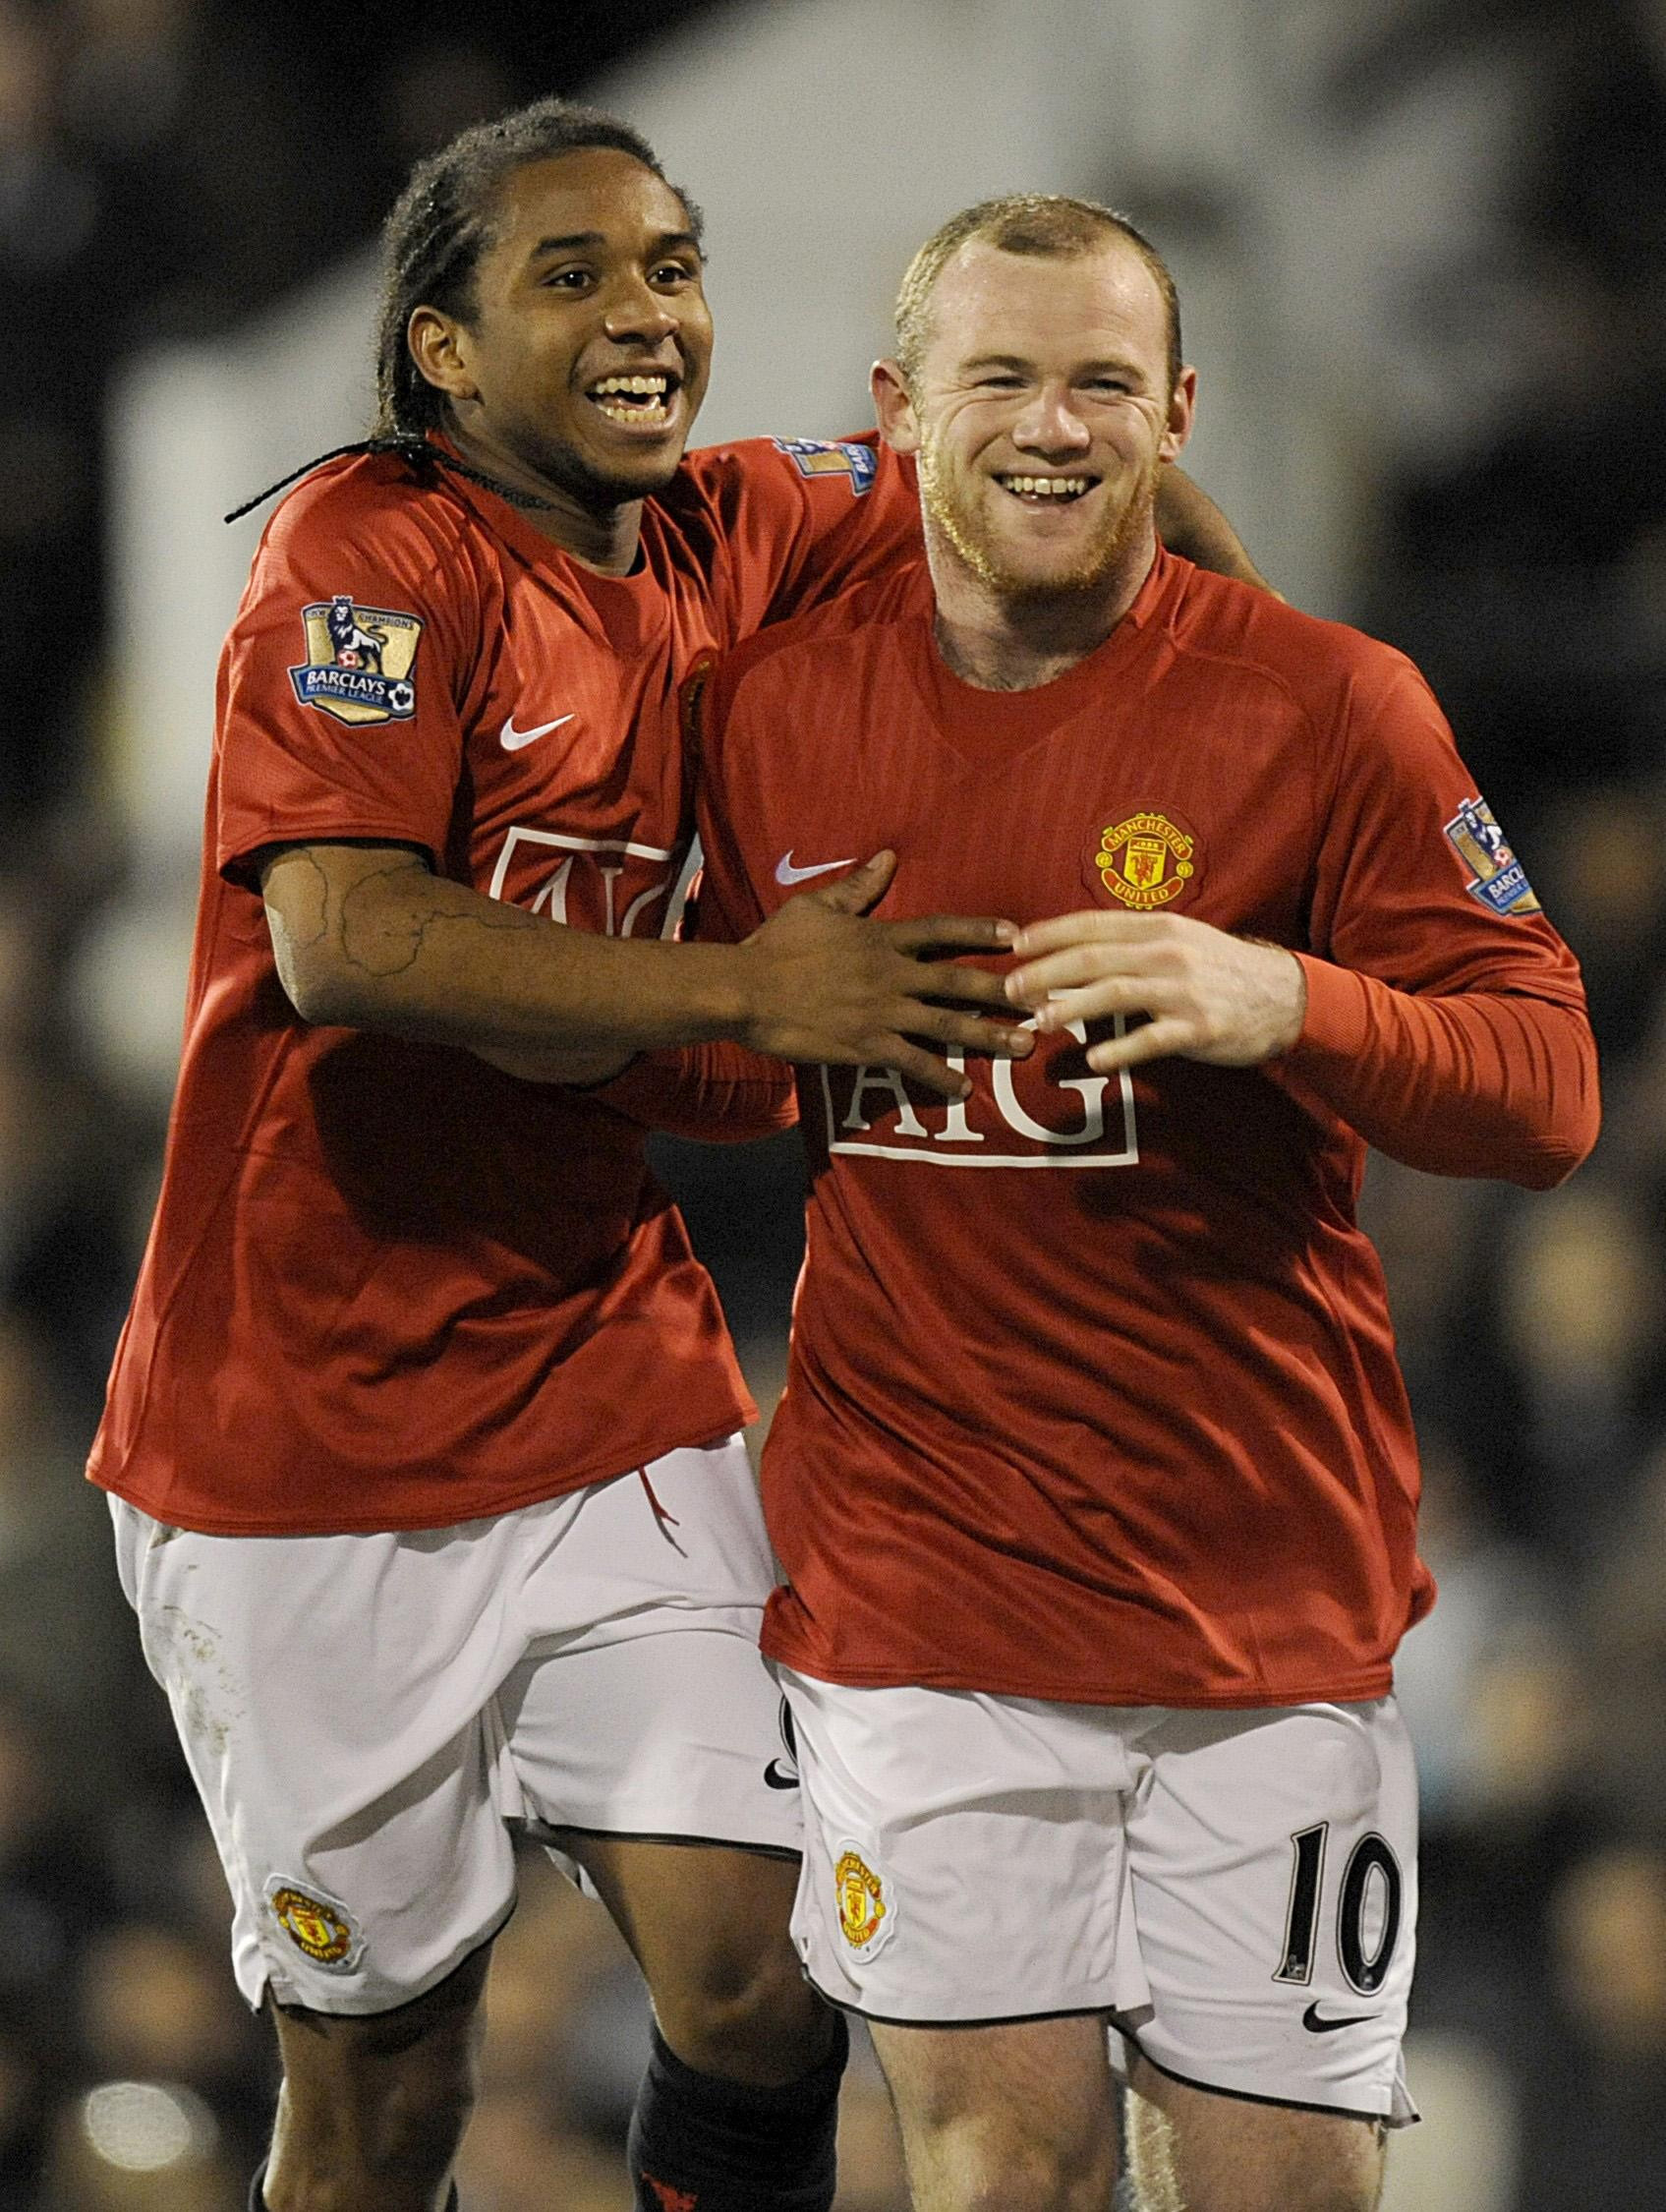 The midfielder starred for the Red Devils alongside Wayne Rooney